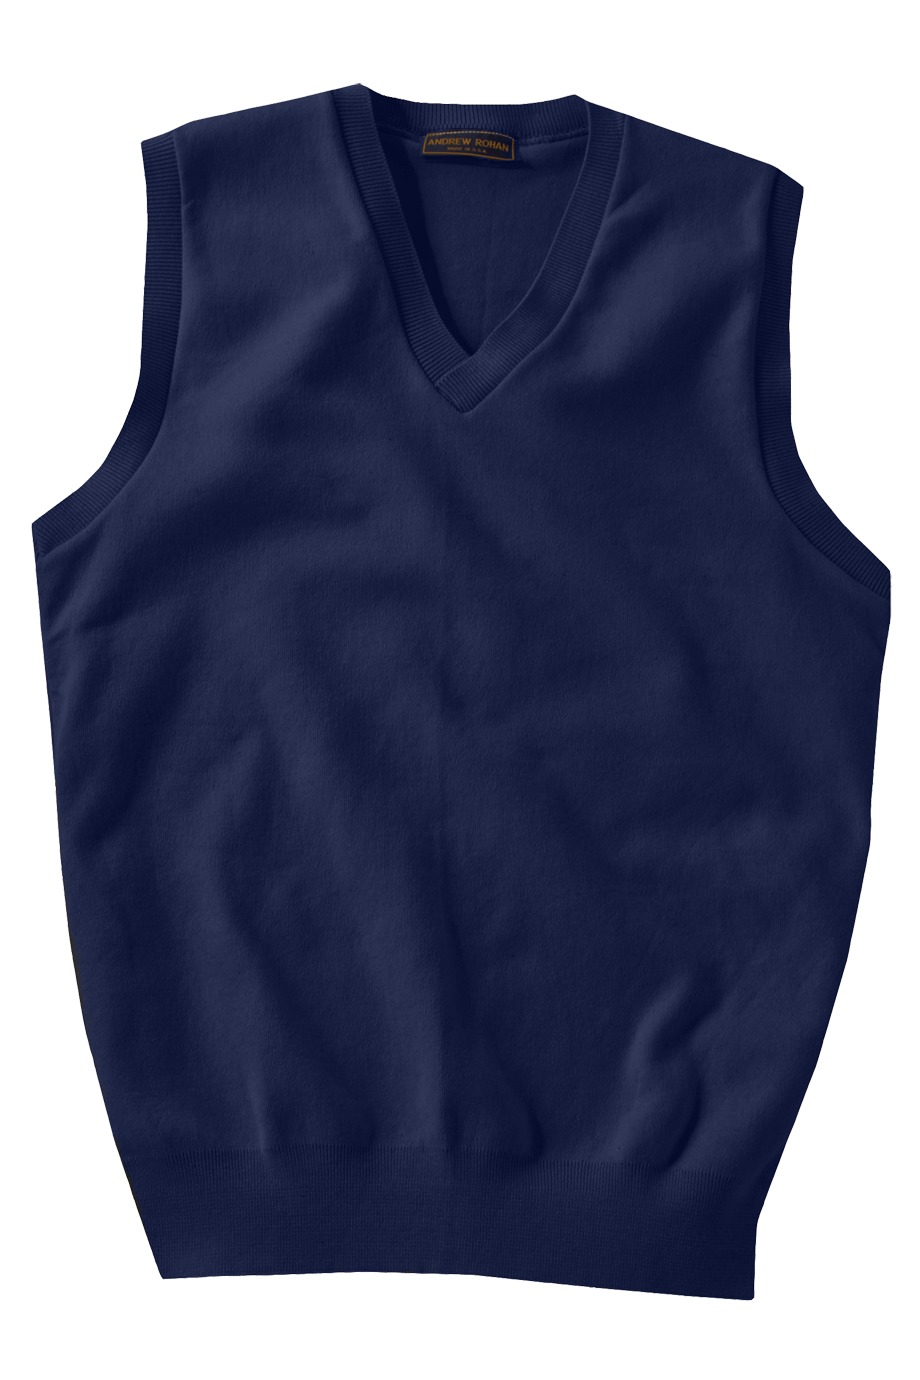 Edwards Garment 701 - Men's Cotton Cashmere V-Neck Vest